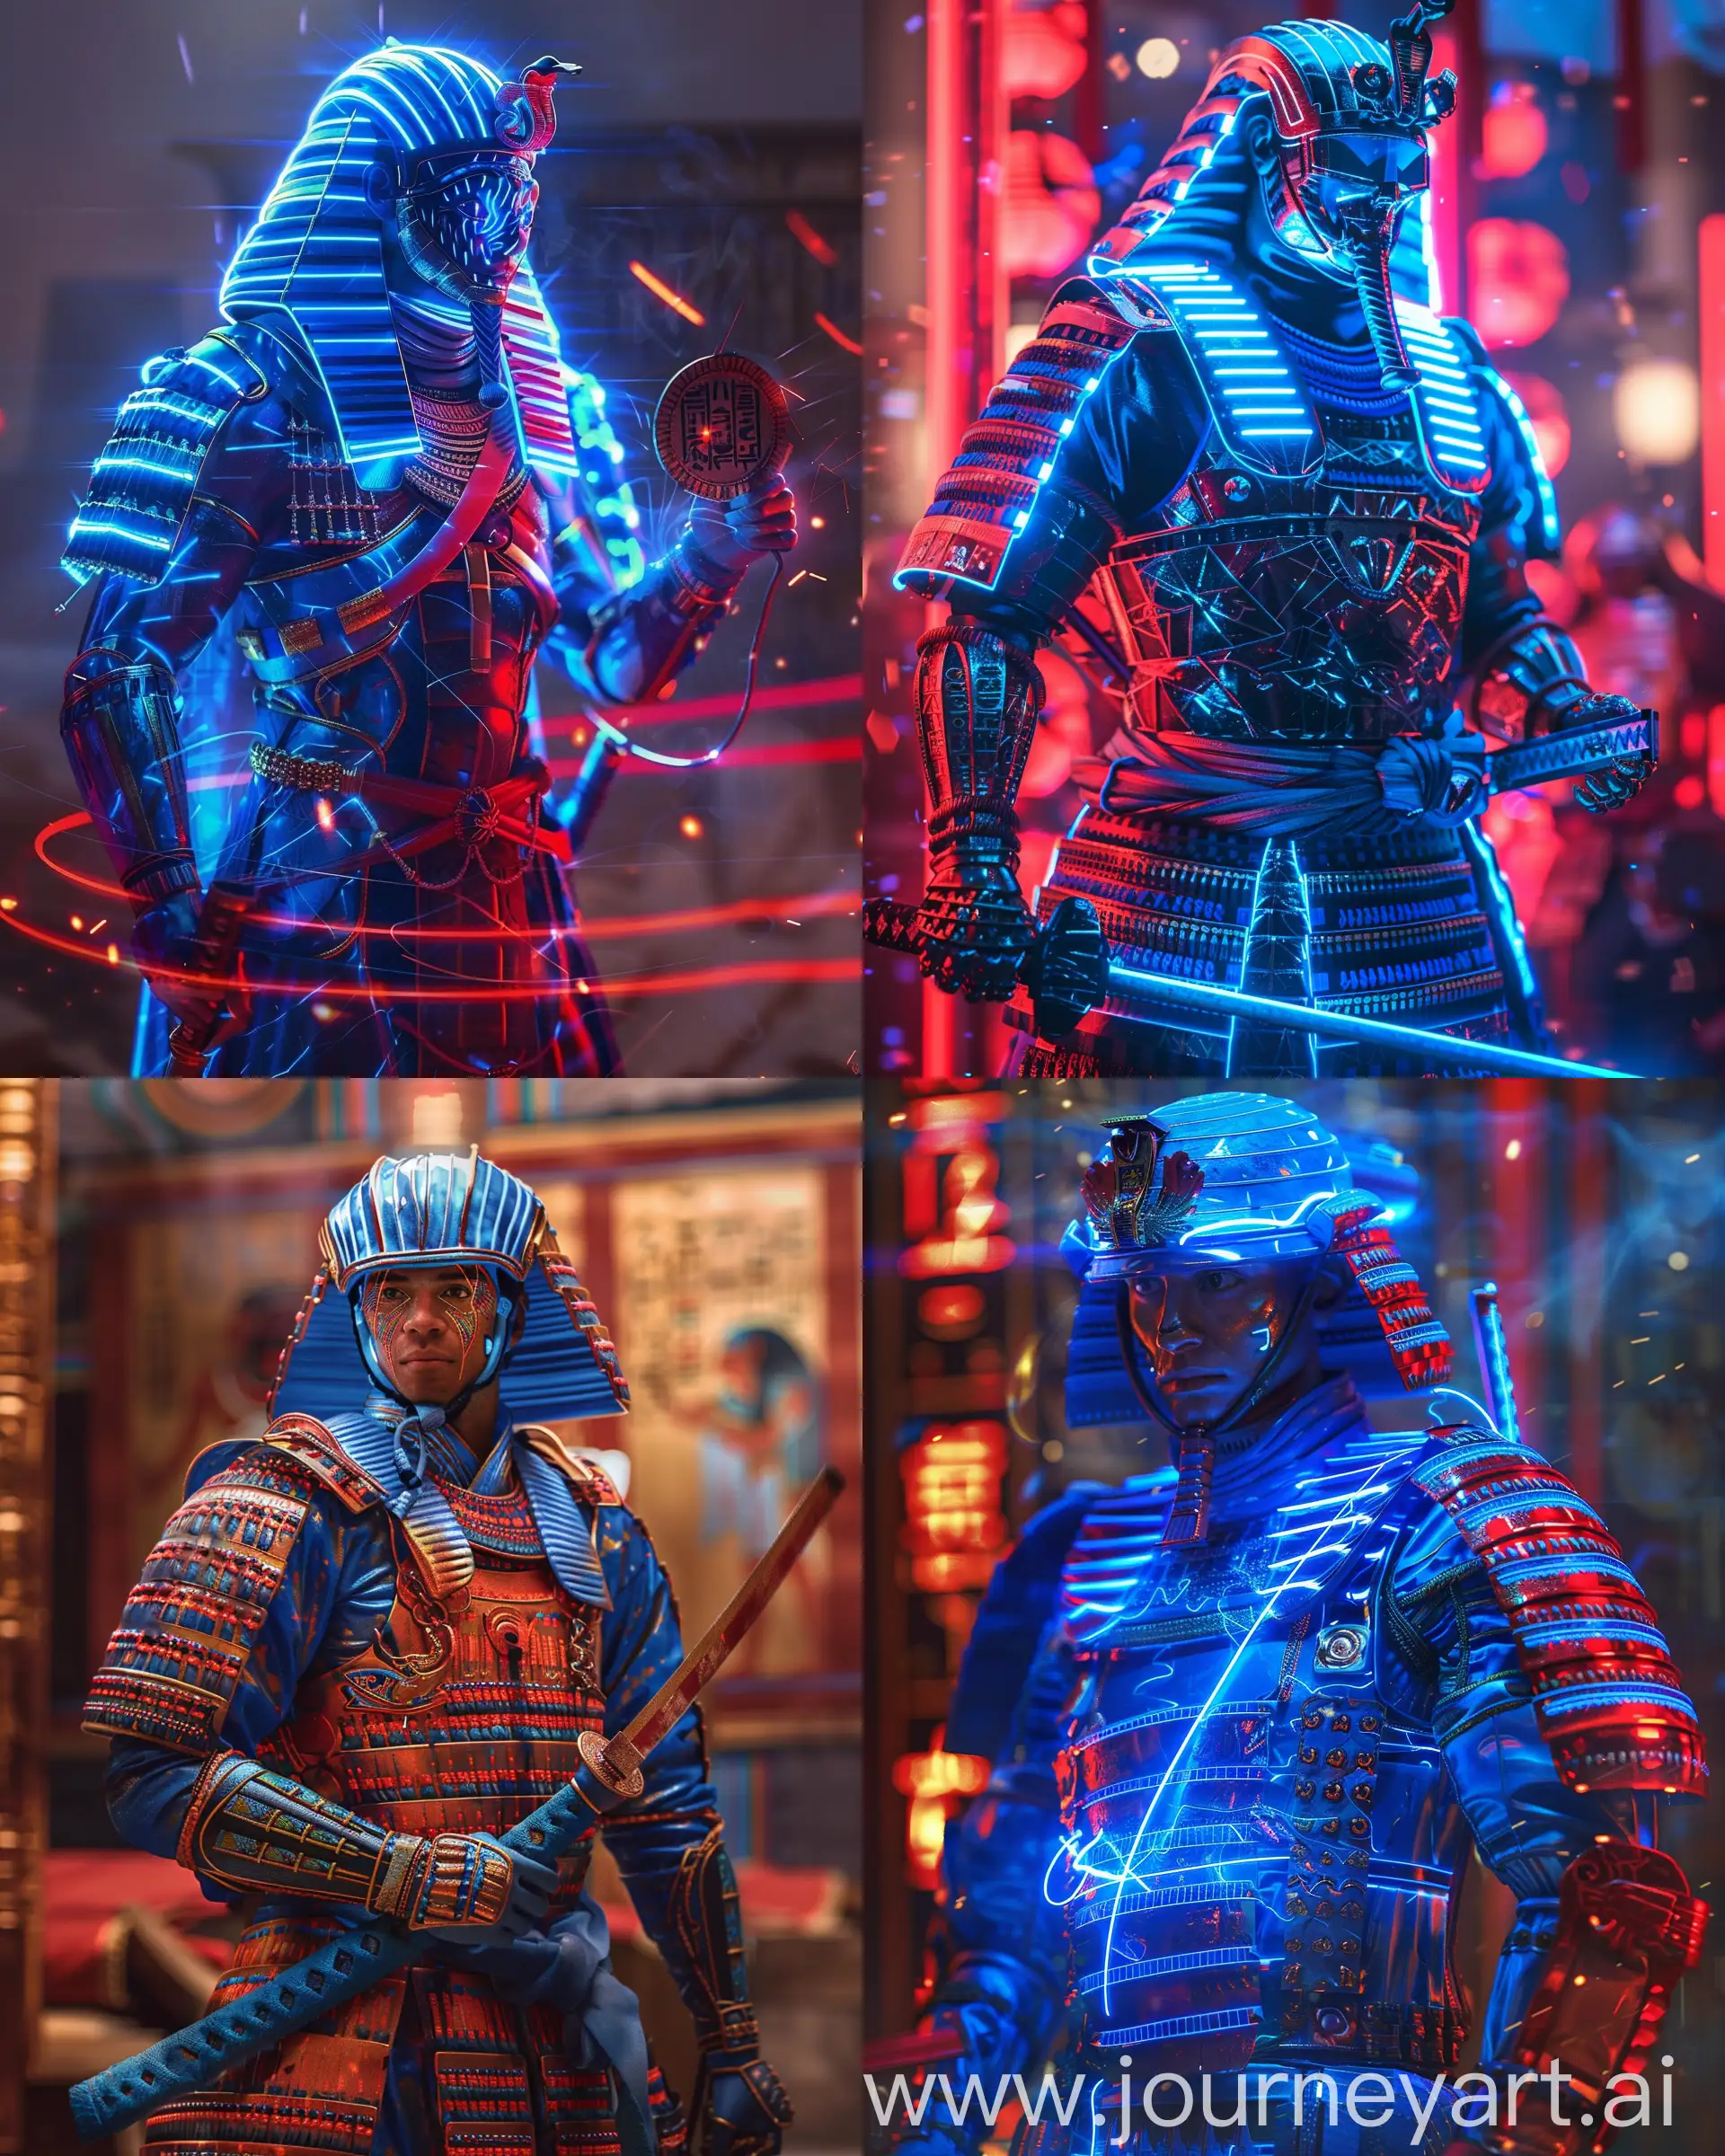 Cyberpunk-Ancient-Egyptian-Samurai-in-HighTech-Armor-with-Sword